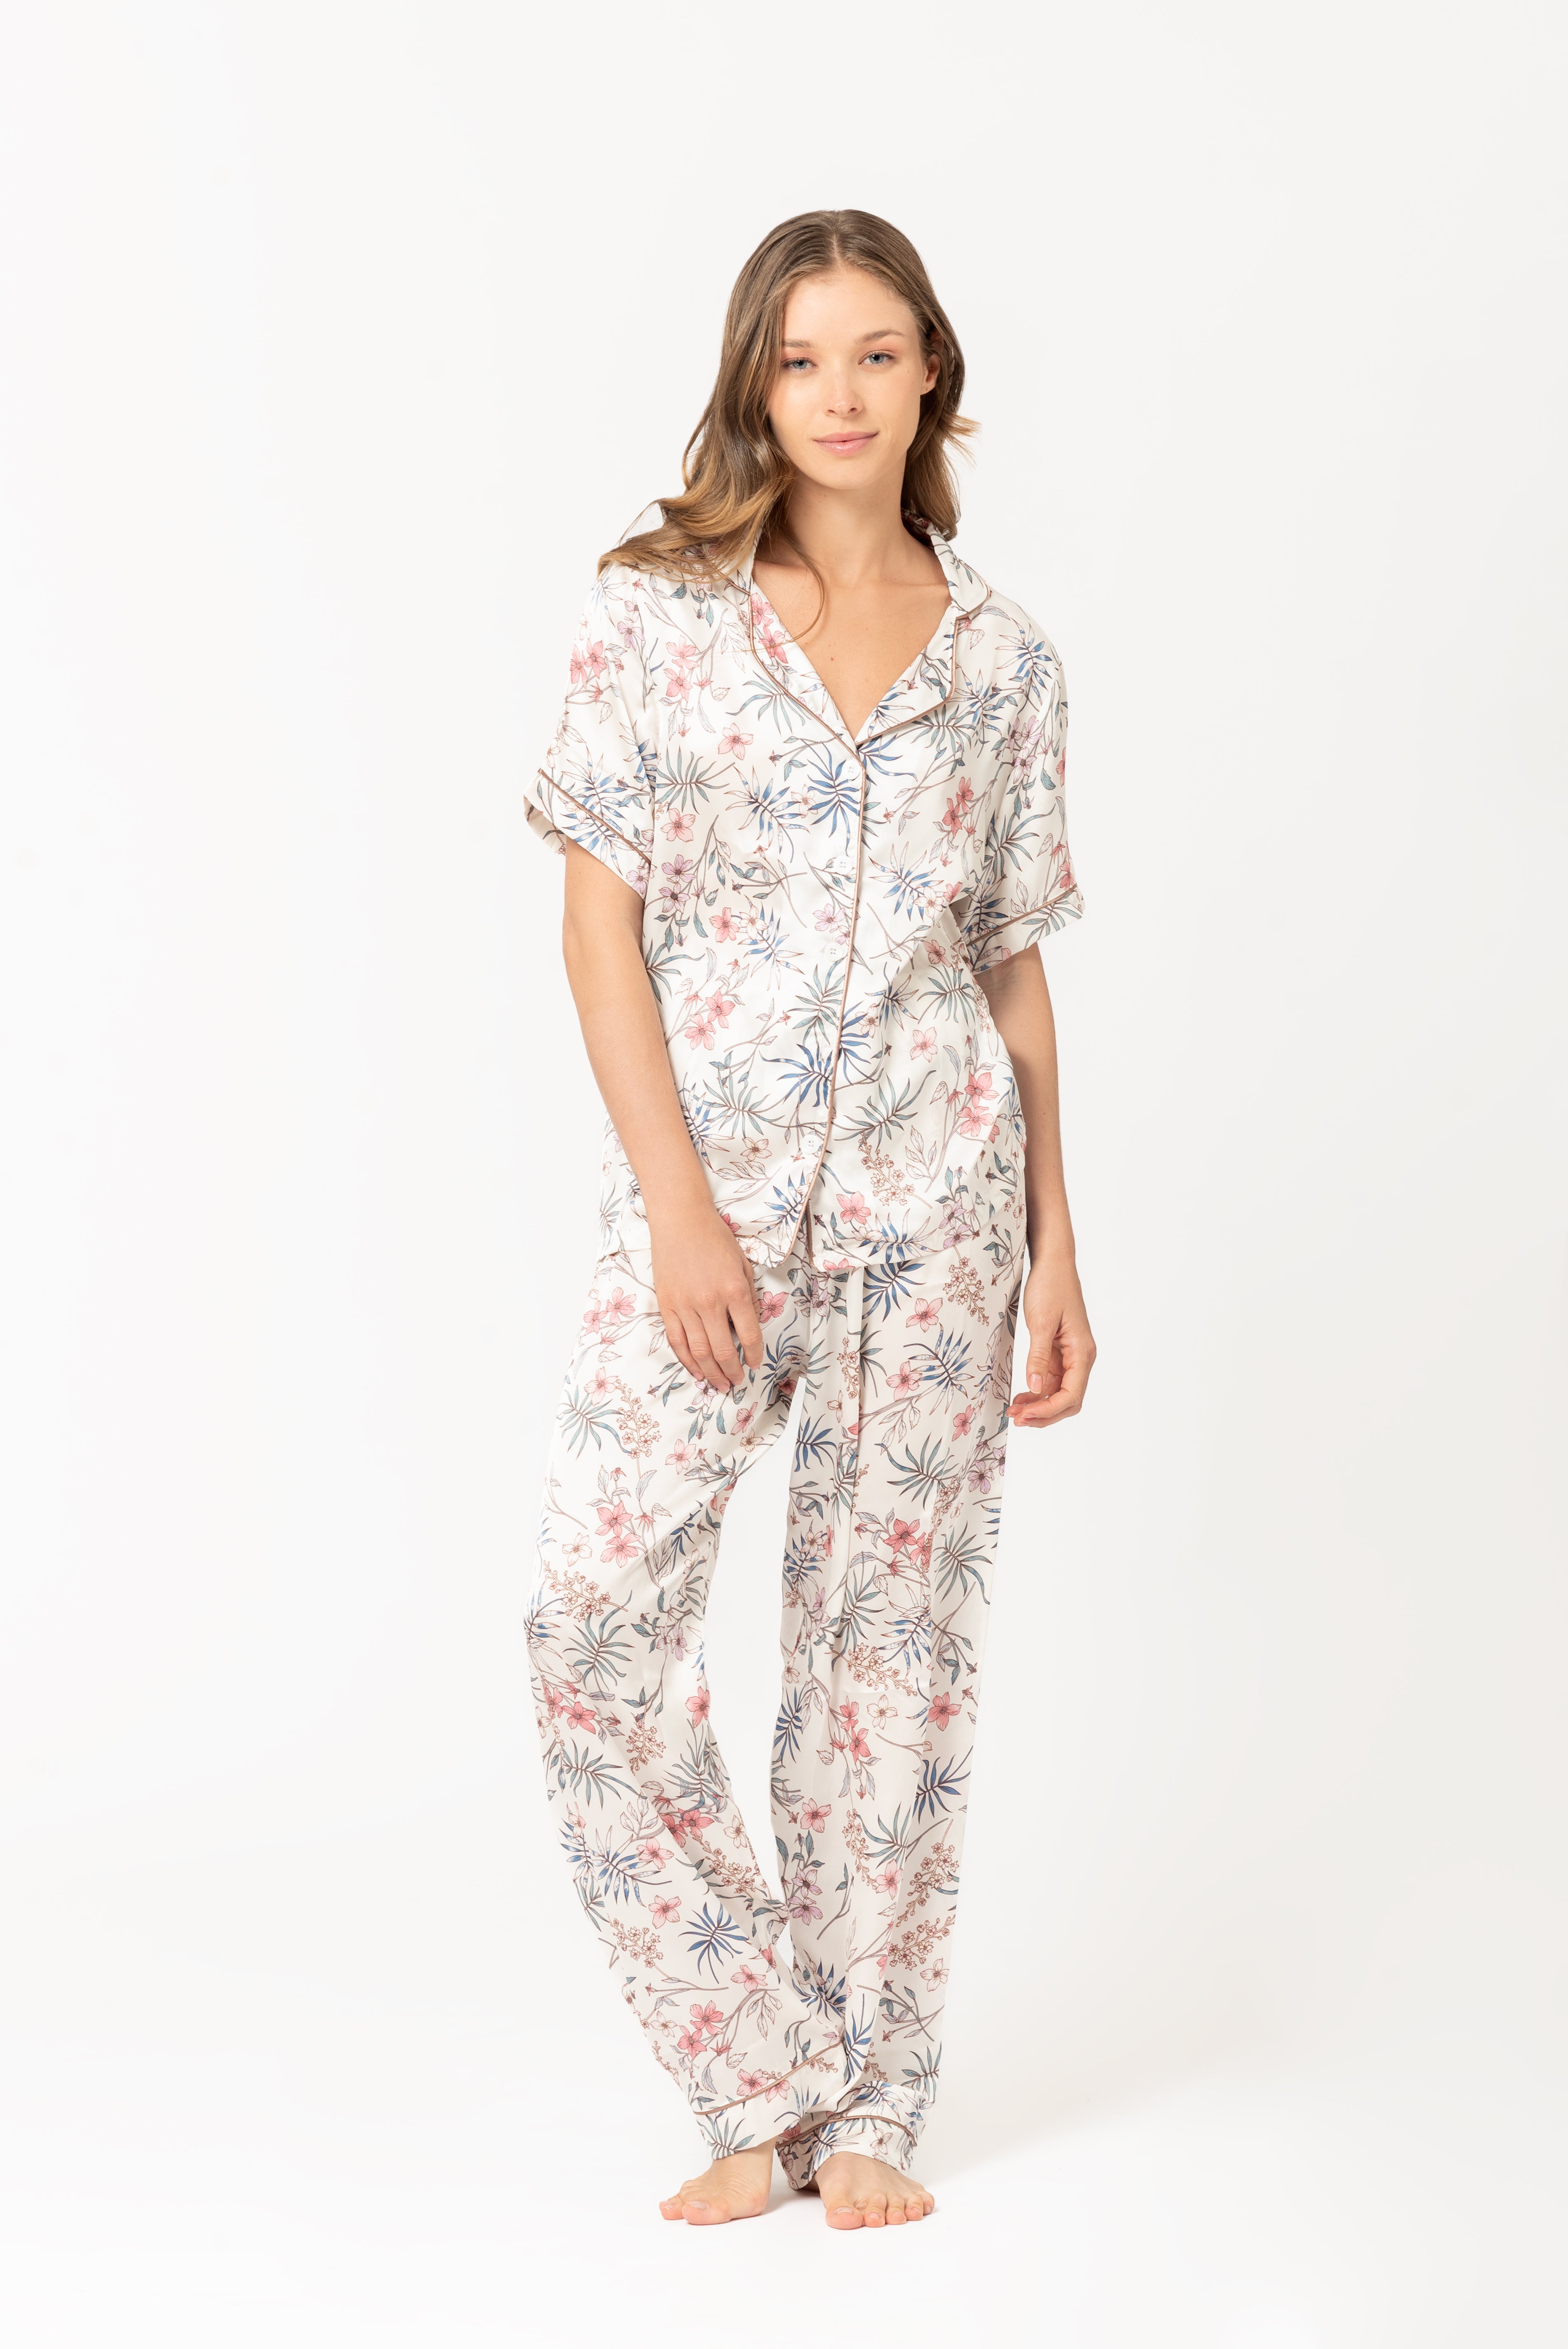 Pijama set Saten Alice - Flowers